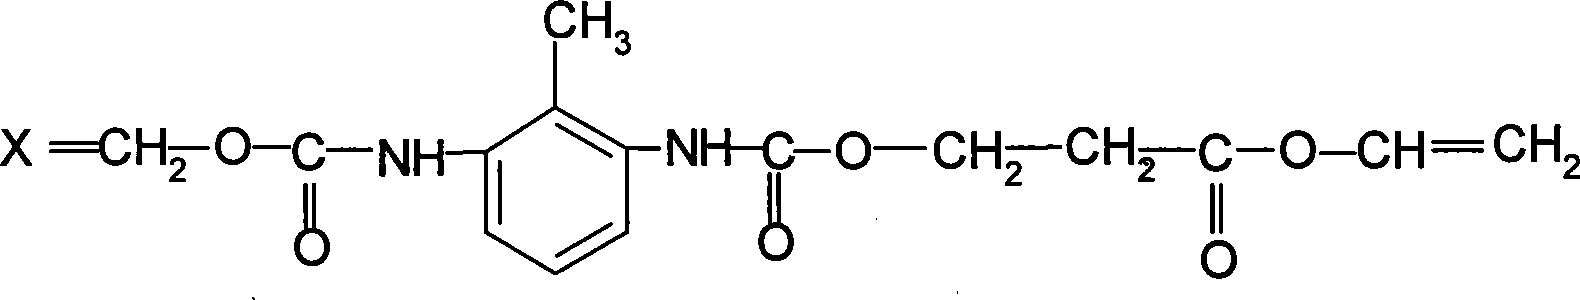 Acrylic polyurethane having star-structure six functional groups and synthesizing method thereof